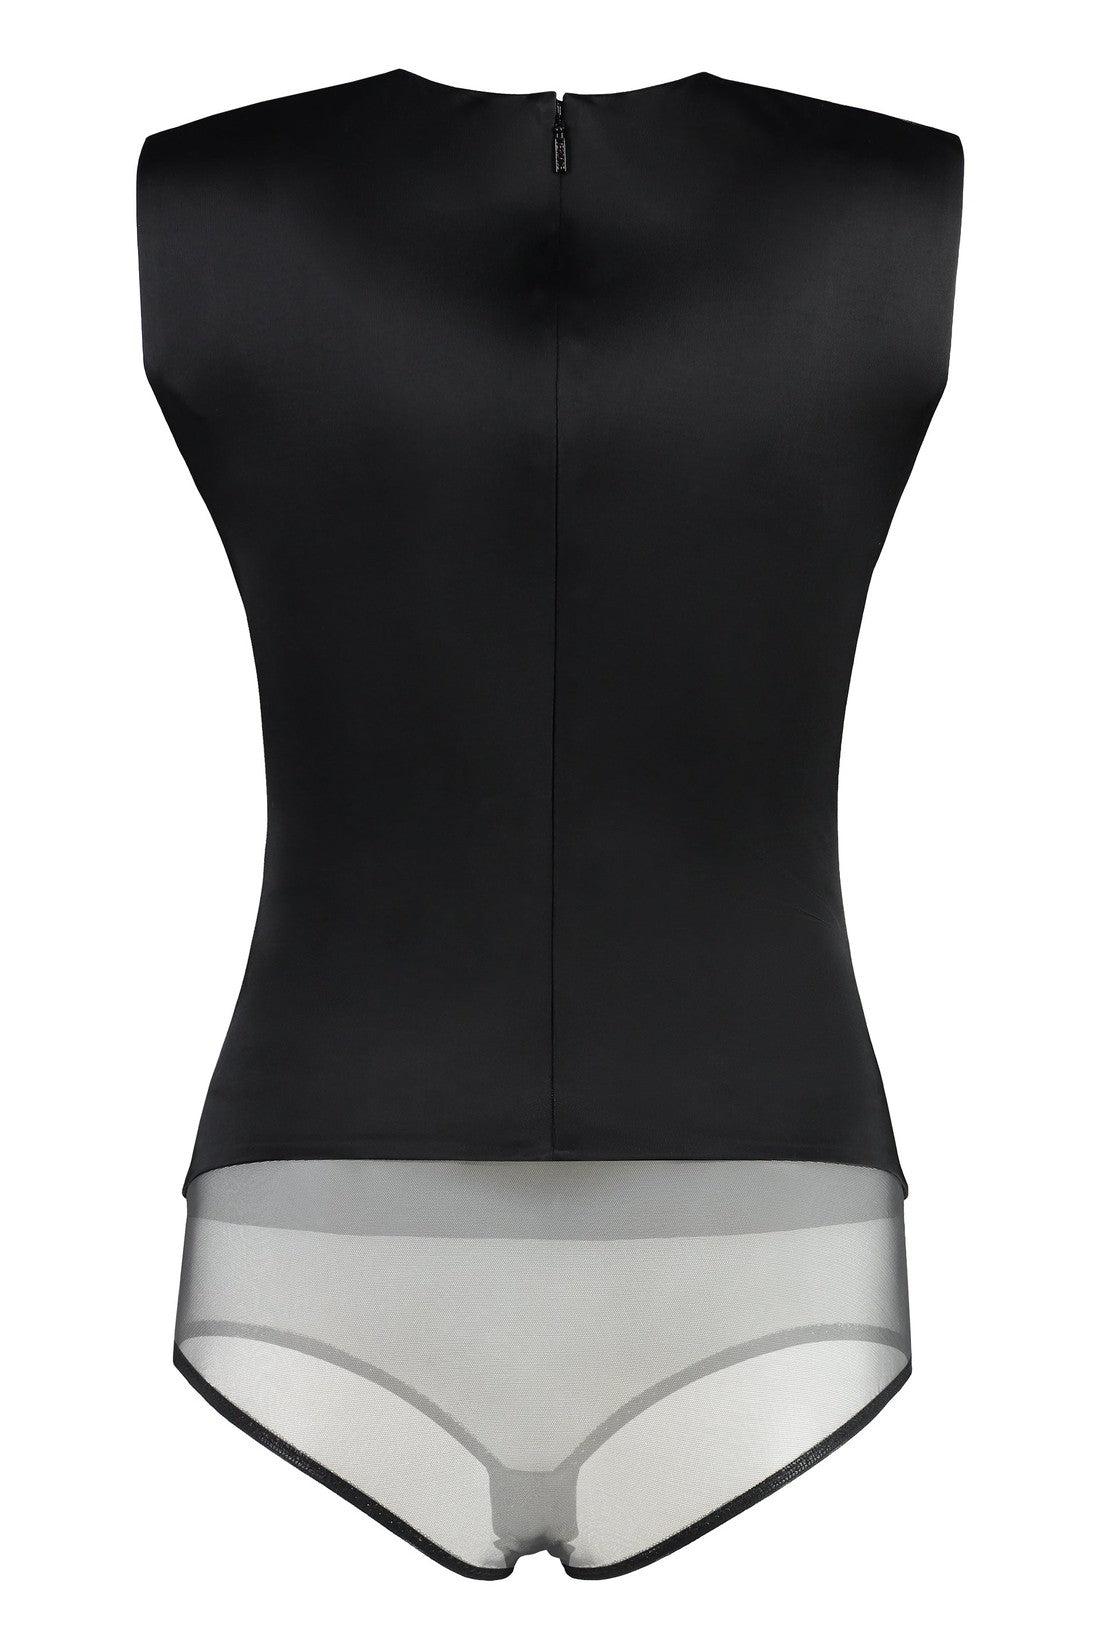 Versace-OUTLET-SALE-Sleeveless bodysuit-ARCHIVIST